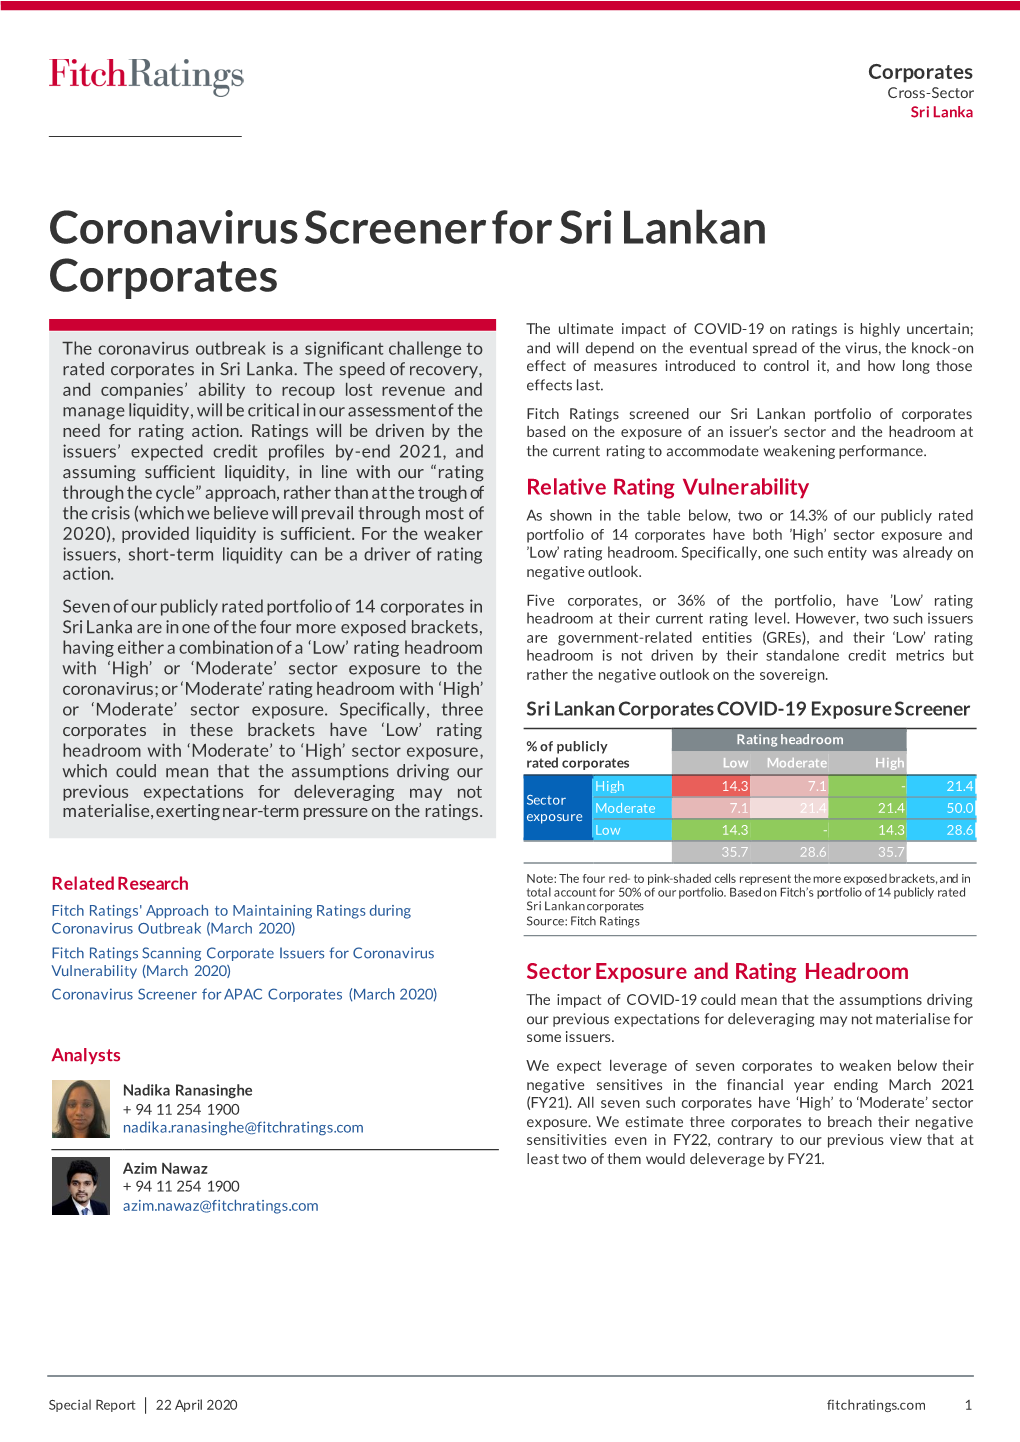 Coronavirus Screener for Sri Lankan Corporates